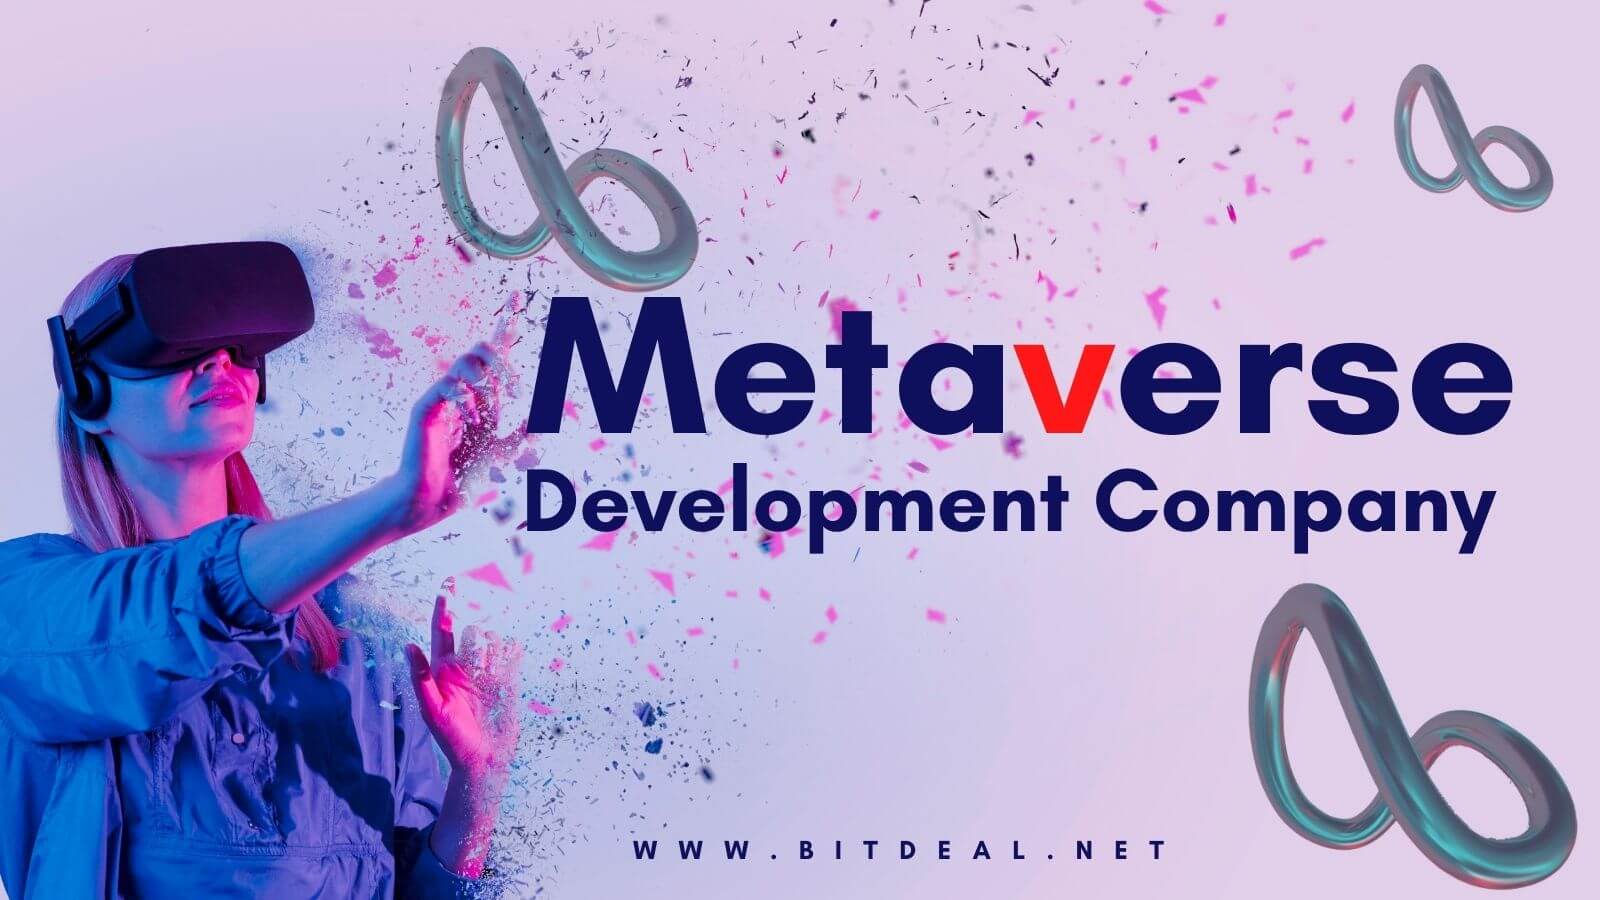 Metaverse Development Company - Bitdeal